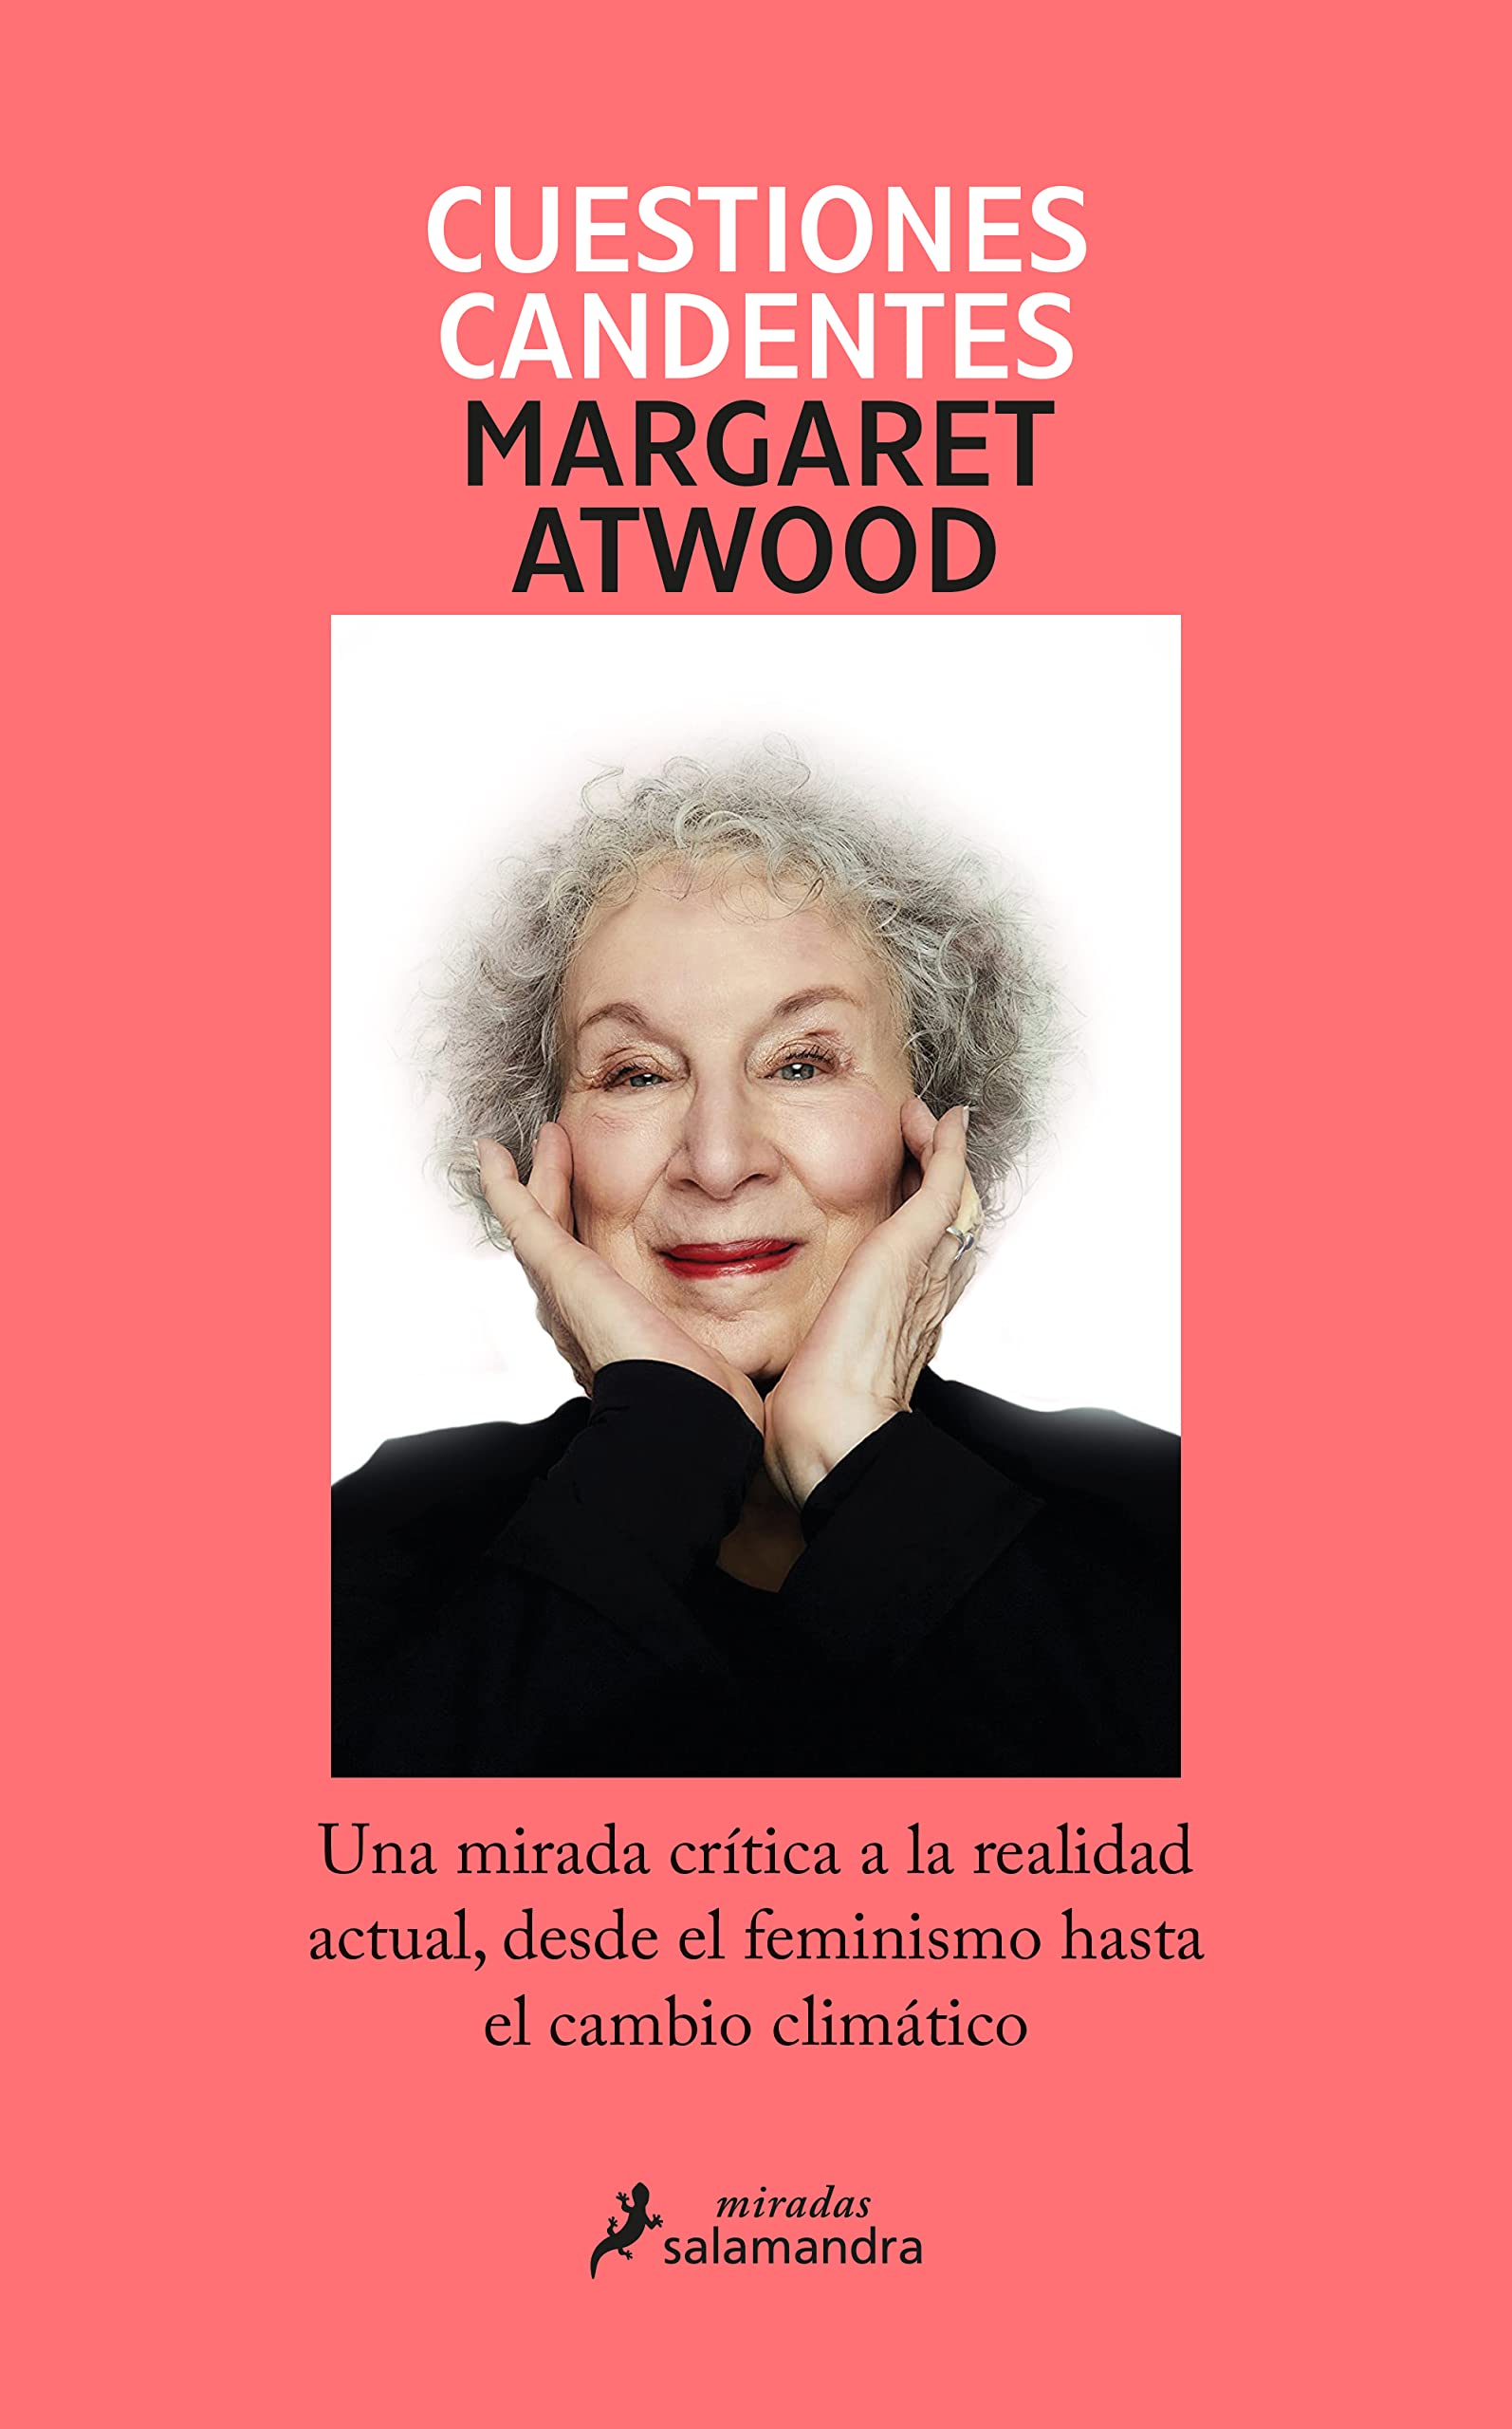 Cuestiones candentes, de Margaret Atwood